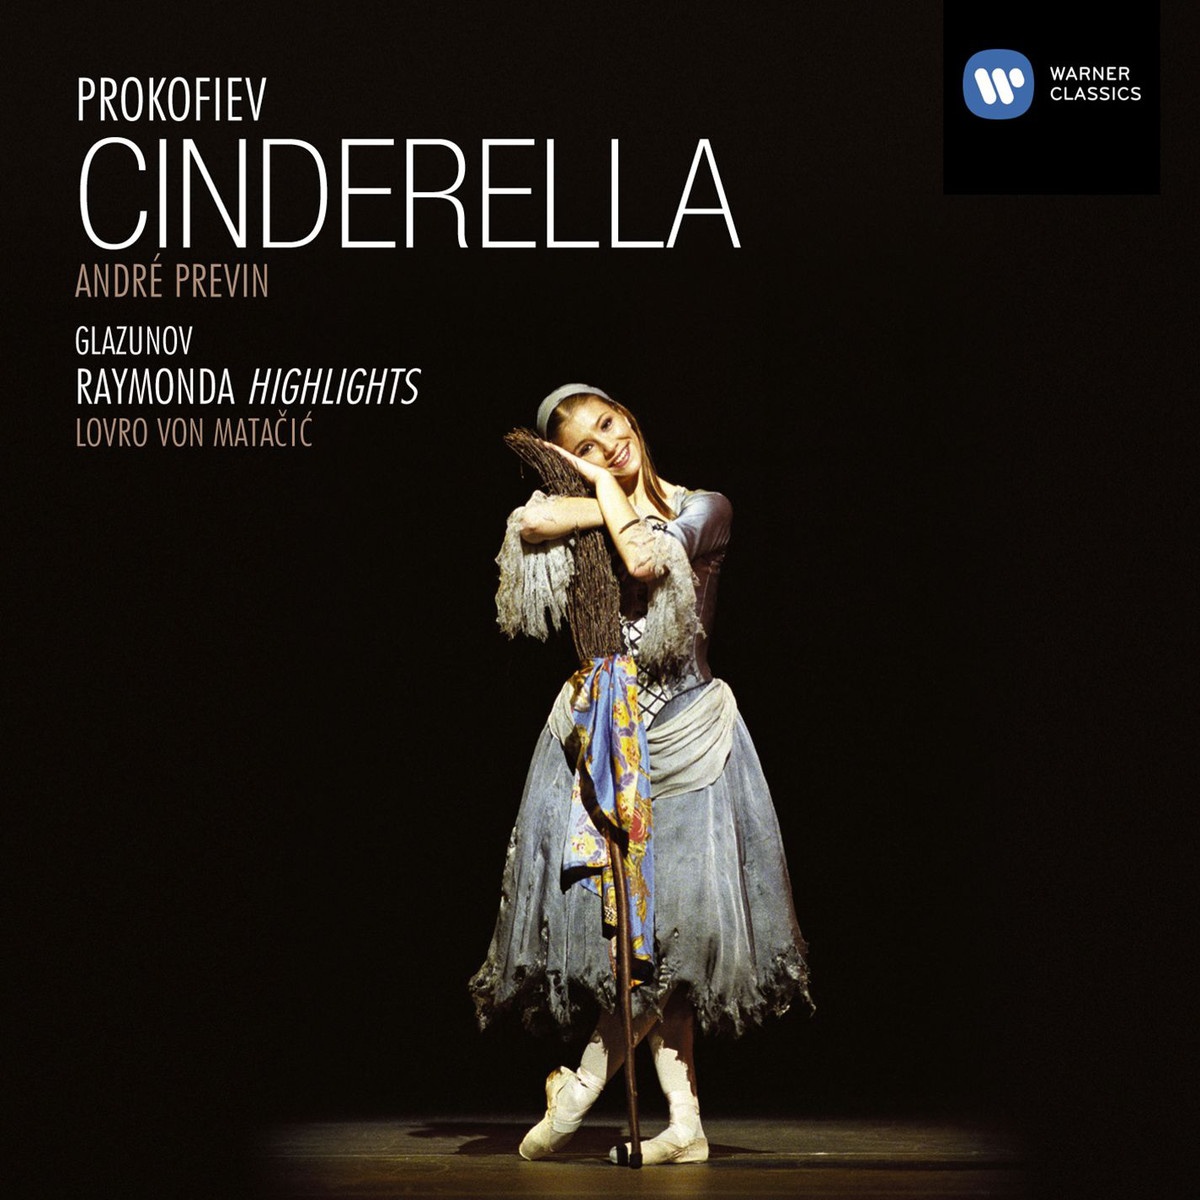 Cinderella   Ballet in three acts Op. 87, Act II: Cavalier' s dance Bourre e: Allegro pesante